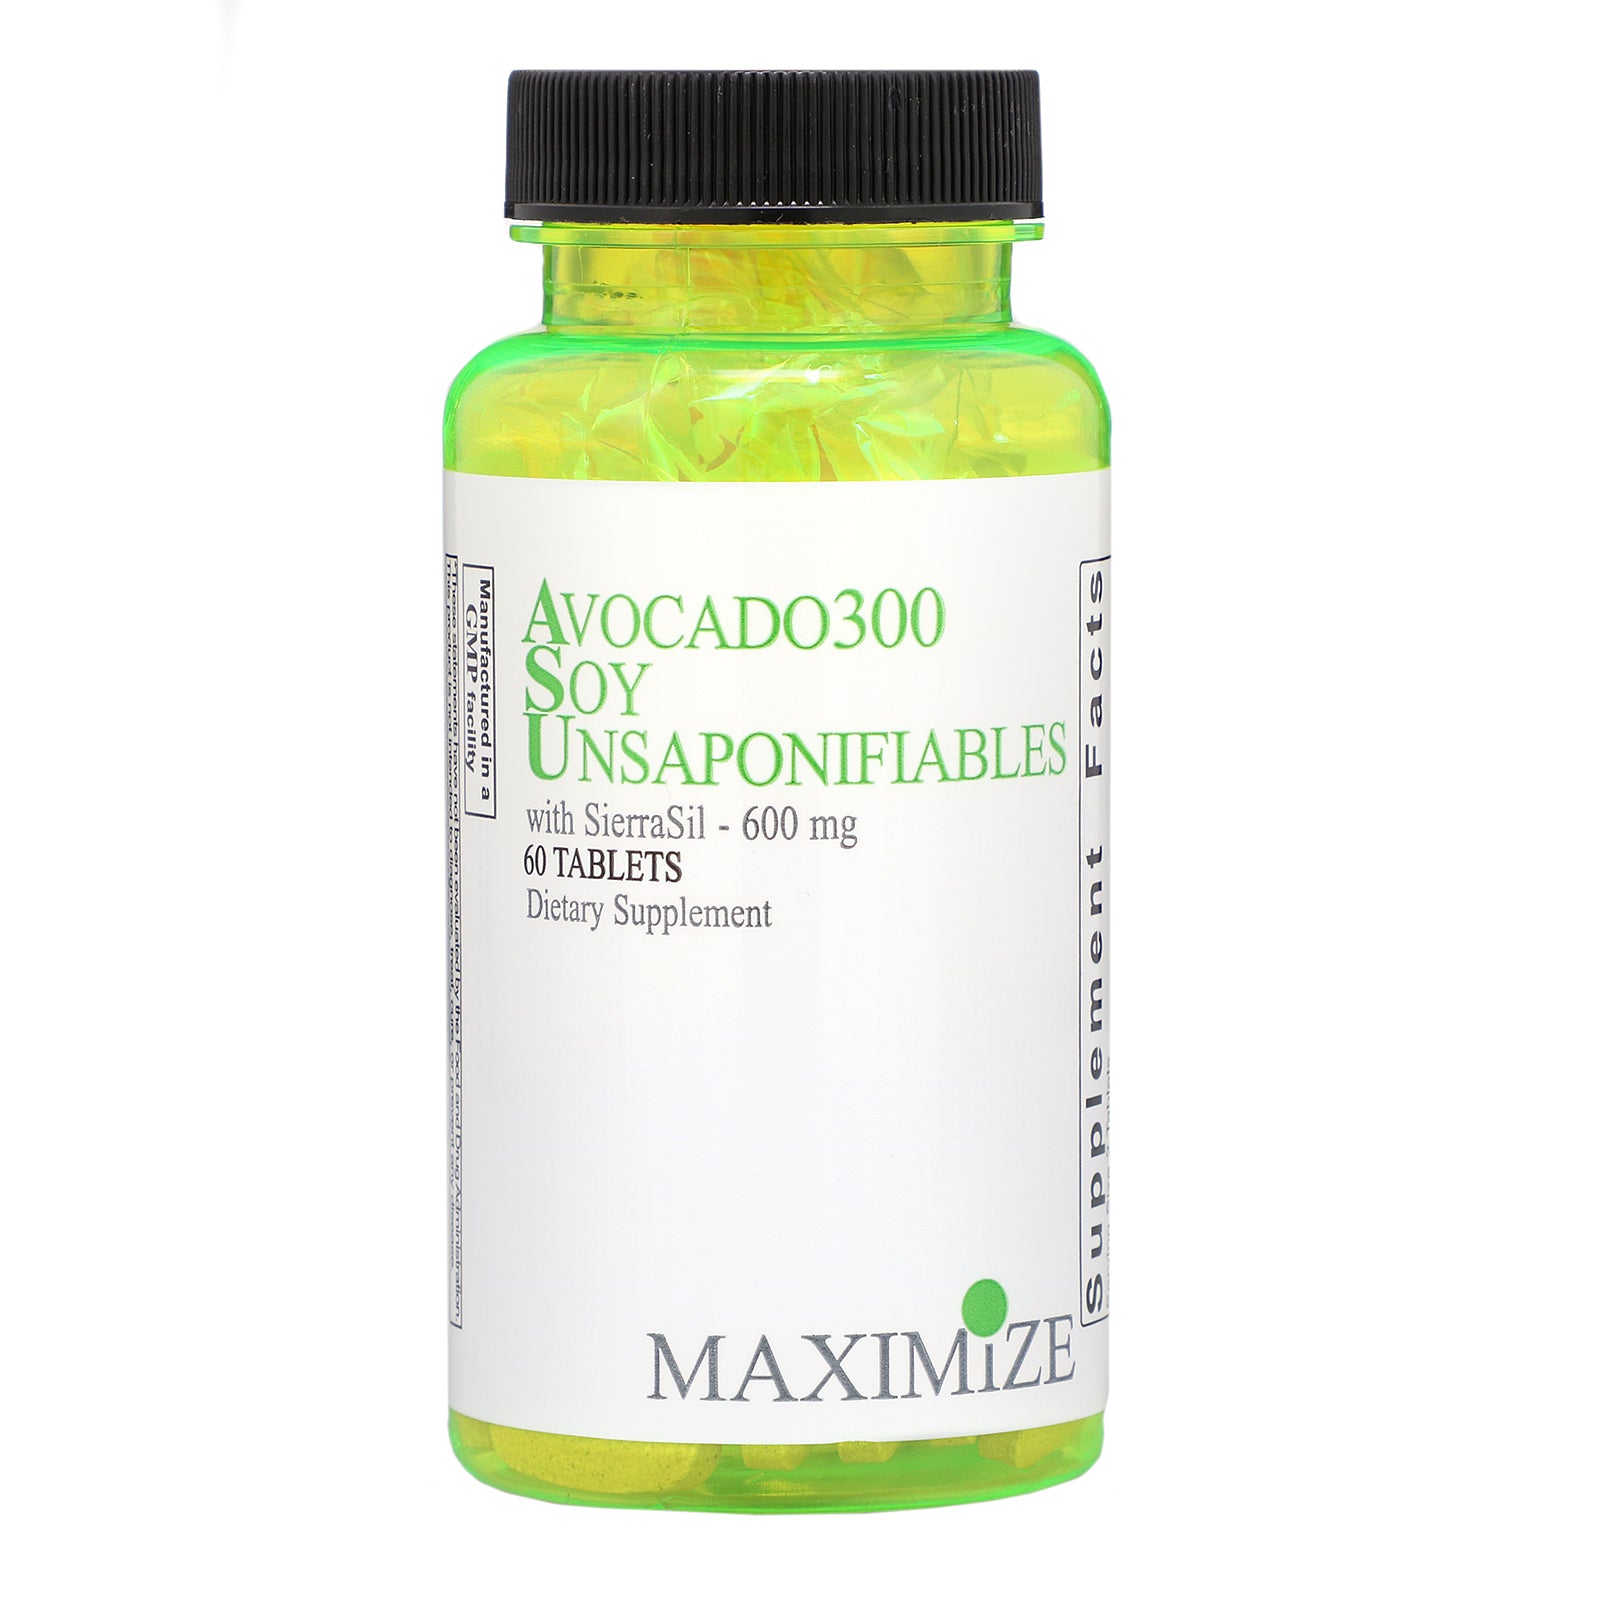 Maximum International, Avocado 300 Soy Unsaponifiables, 600 mg, 60 Tablets